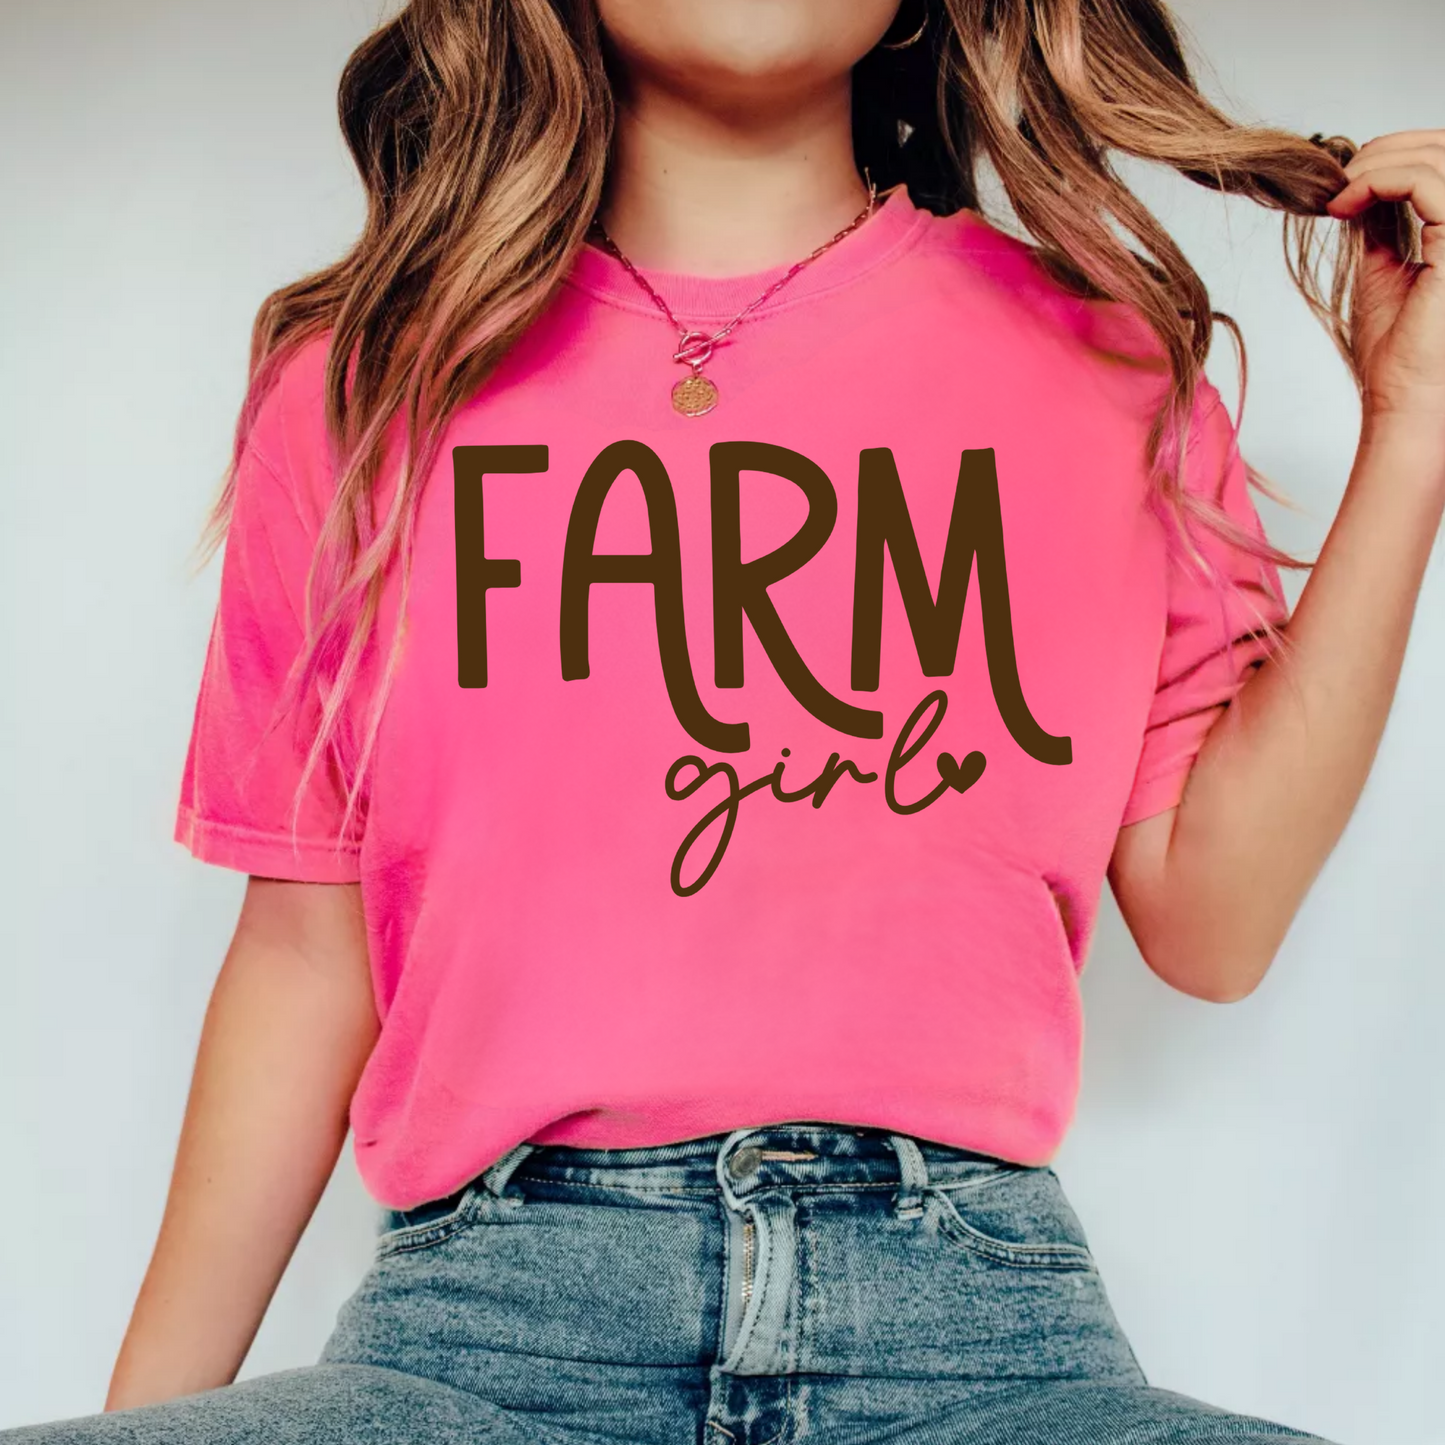 (Shirt not included) Farm Girl - Dark Brown Screen print Transfer